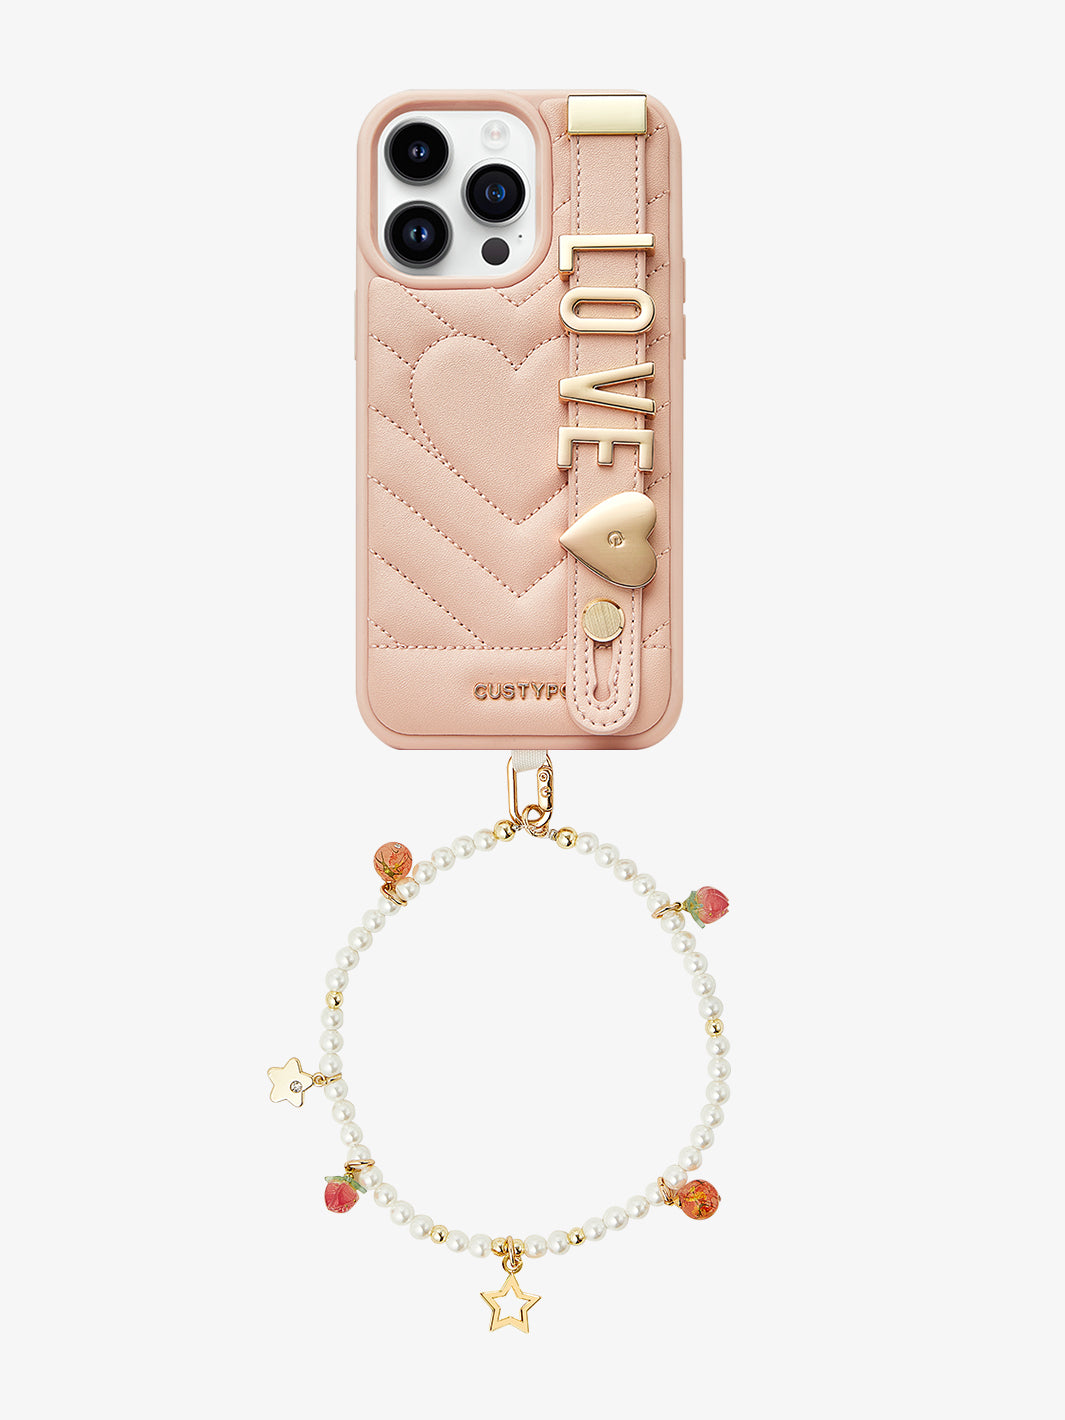 Custype phone case pearl chain wrist strap